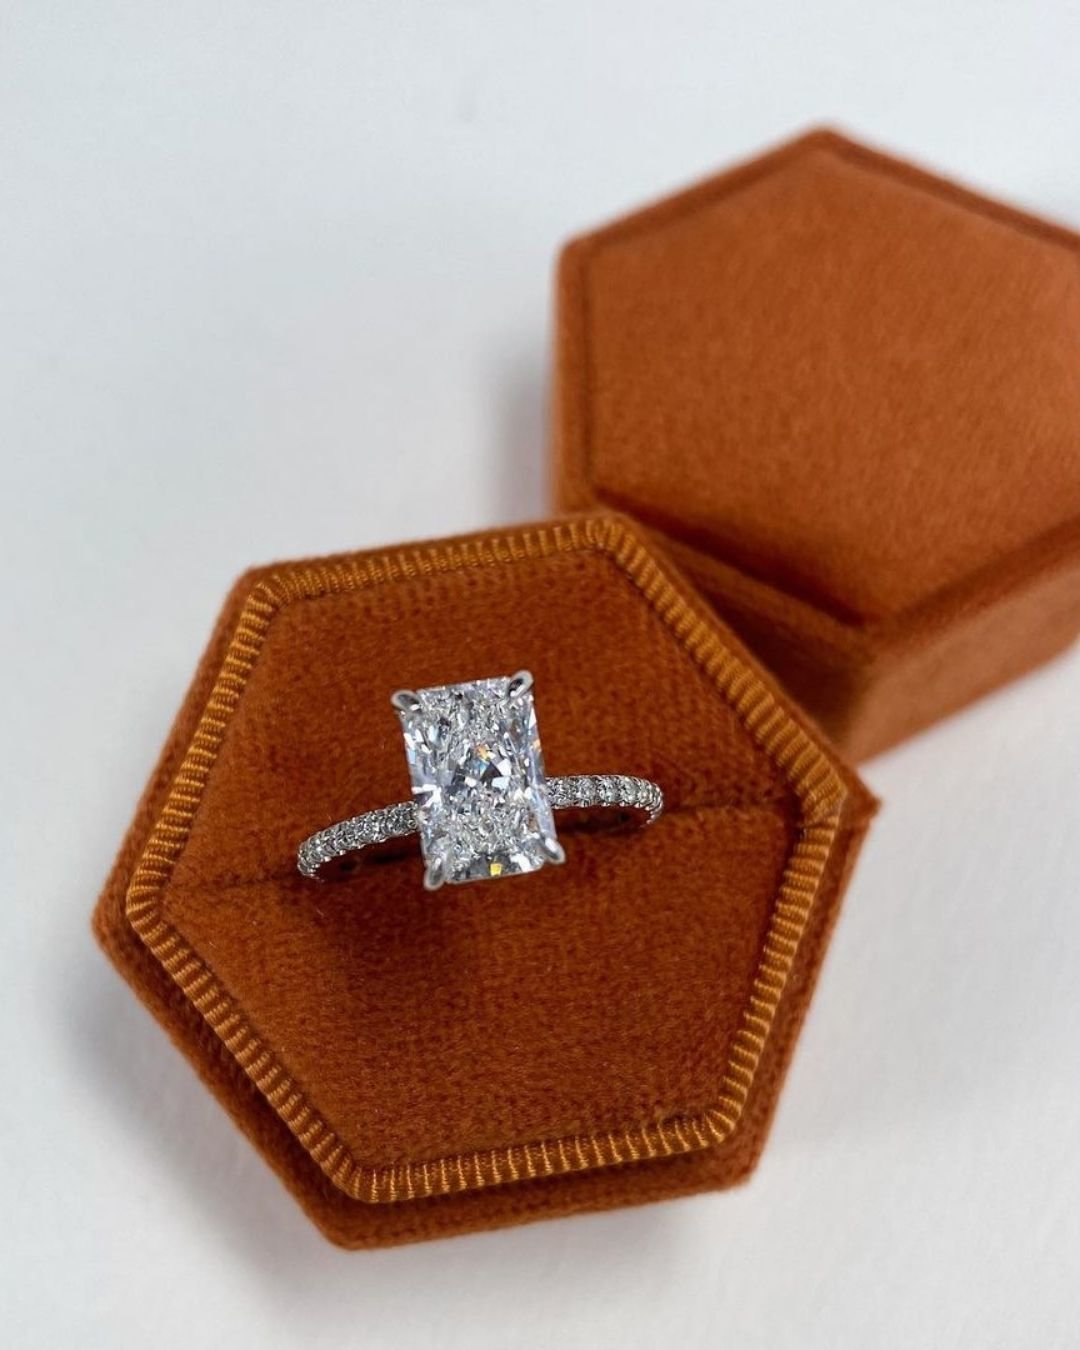 simple engagement rings radiant & emerald cut rings1